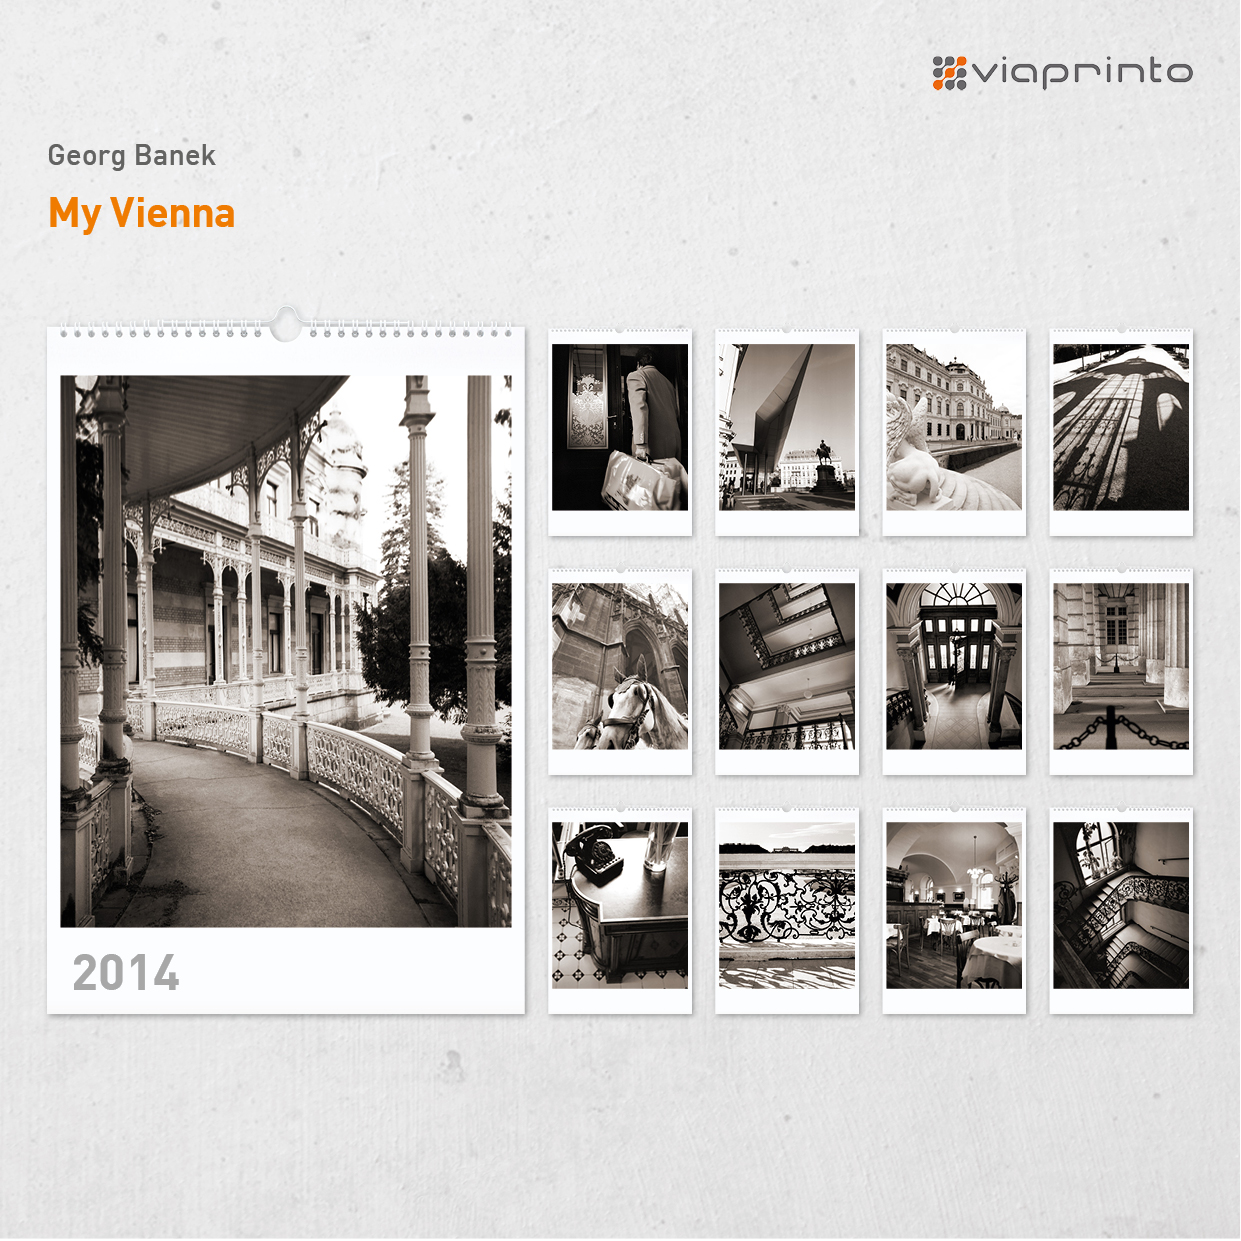 Georg Banek - Motivkalender "My Vienna"